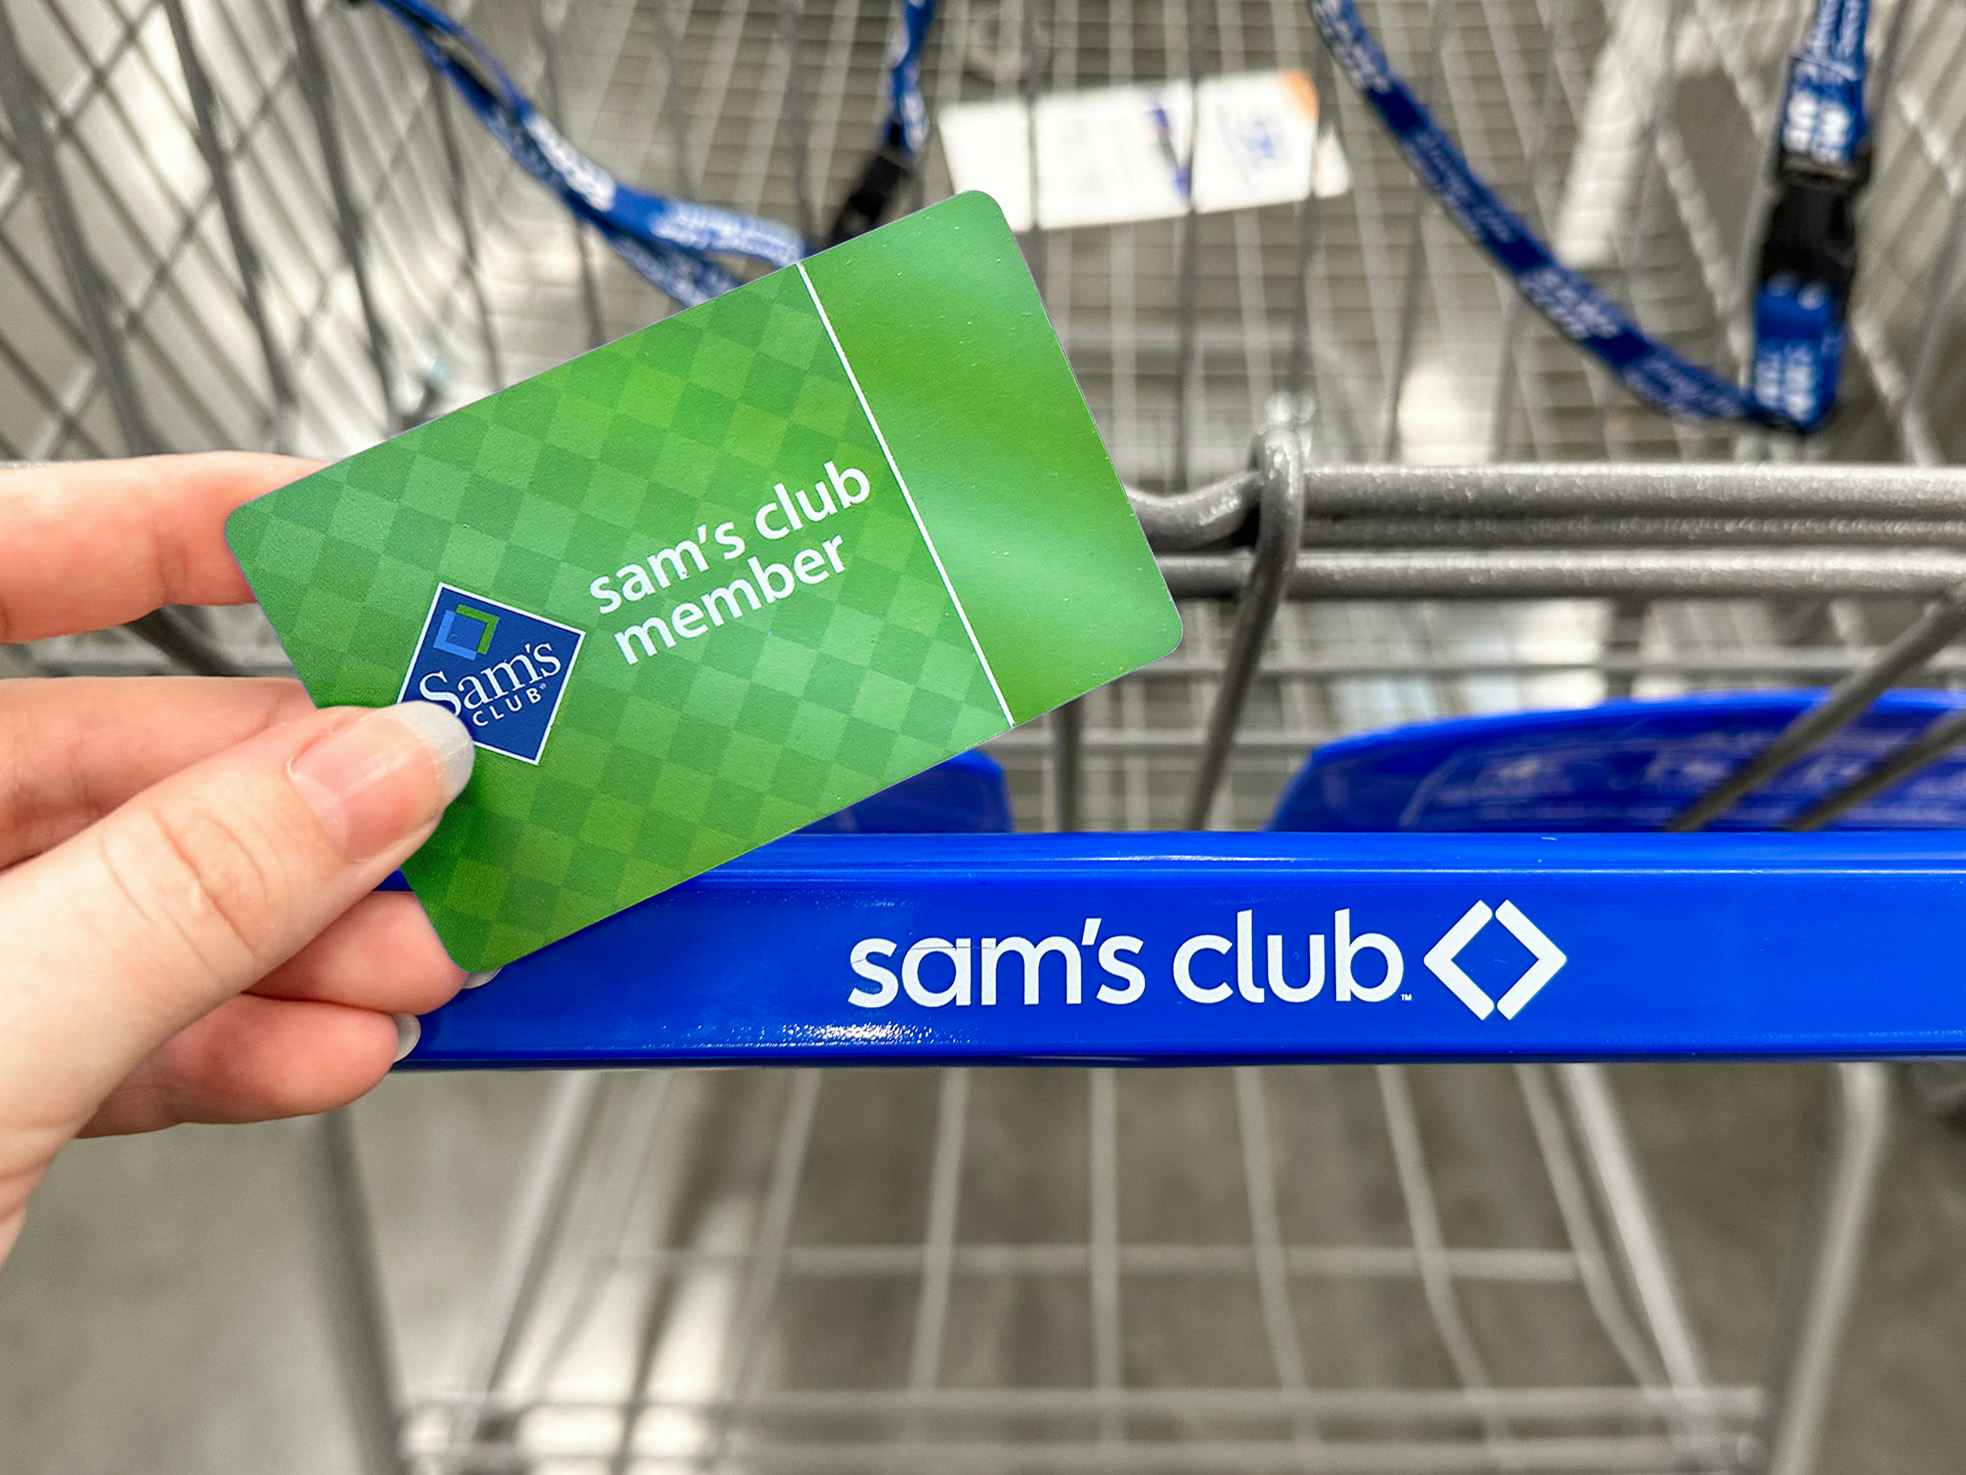 Someone holding a Sam's Club basic membership card next to a Sam's Club cart